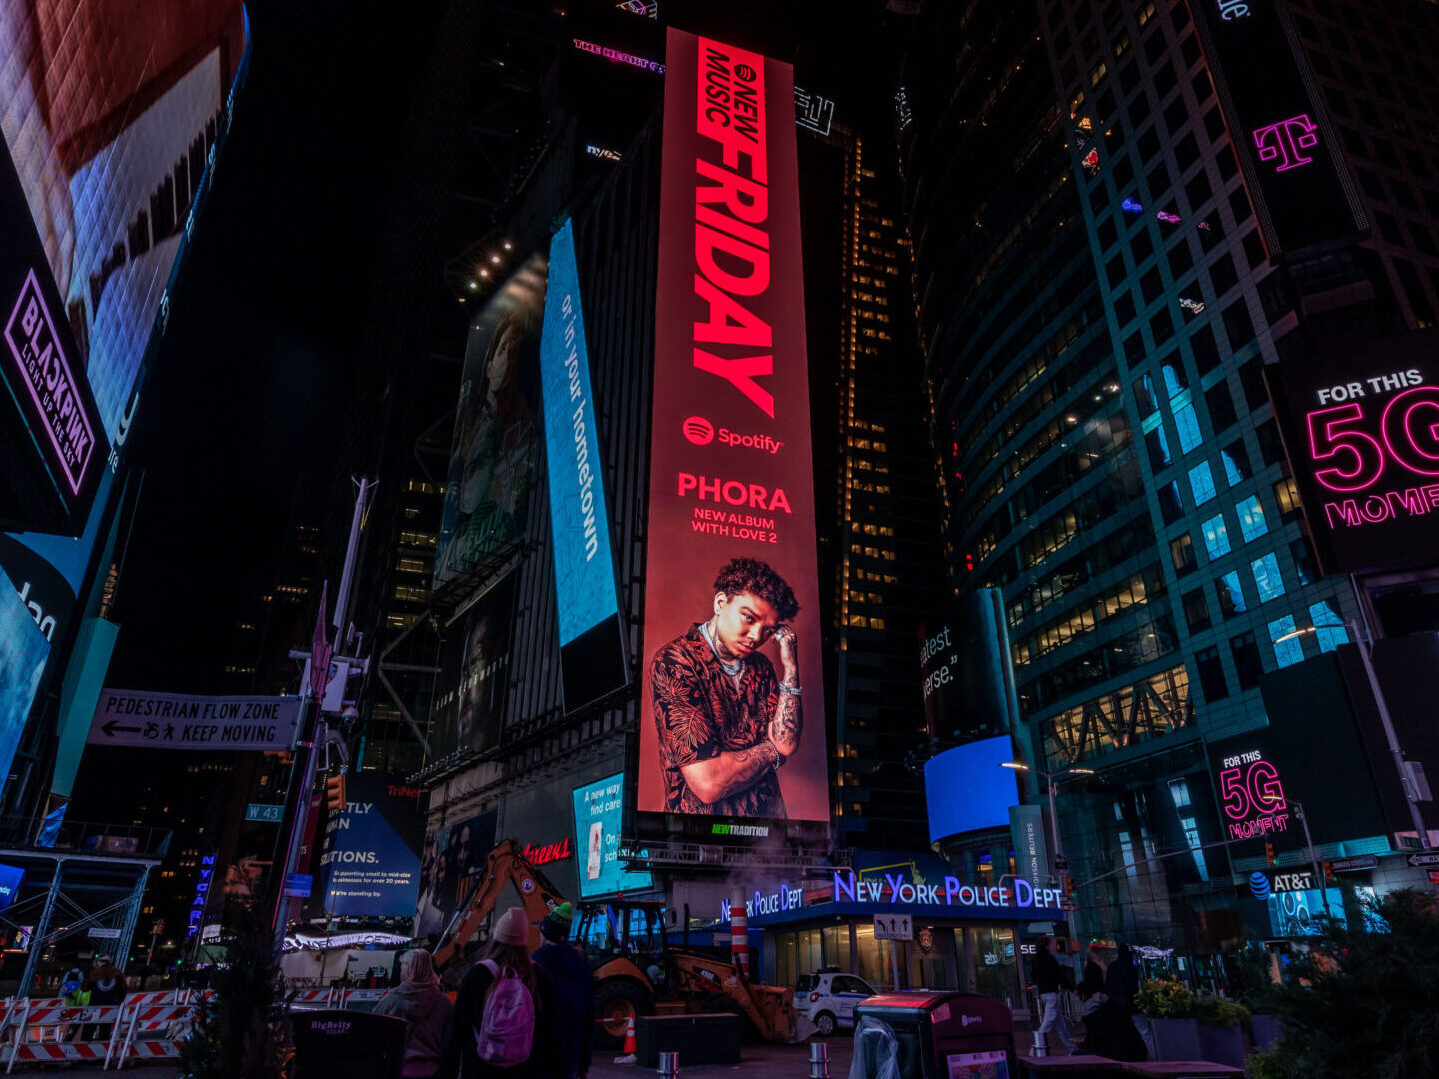 One Times Square Digital Billboard